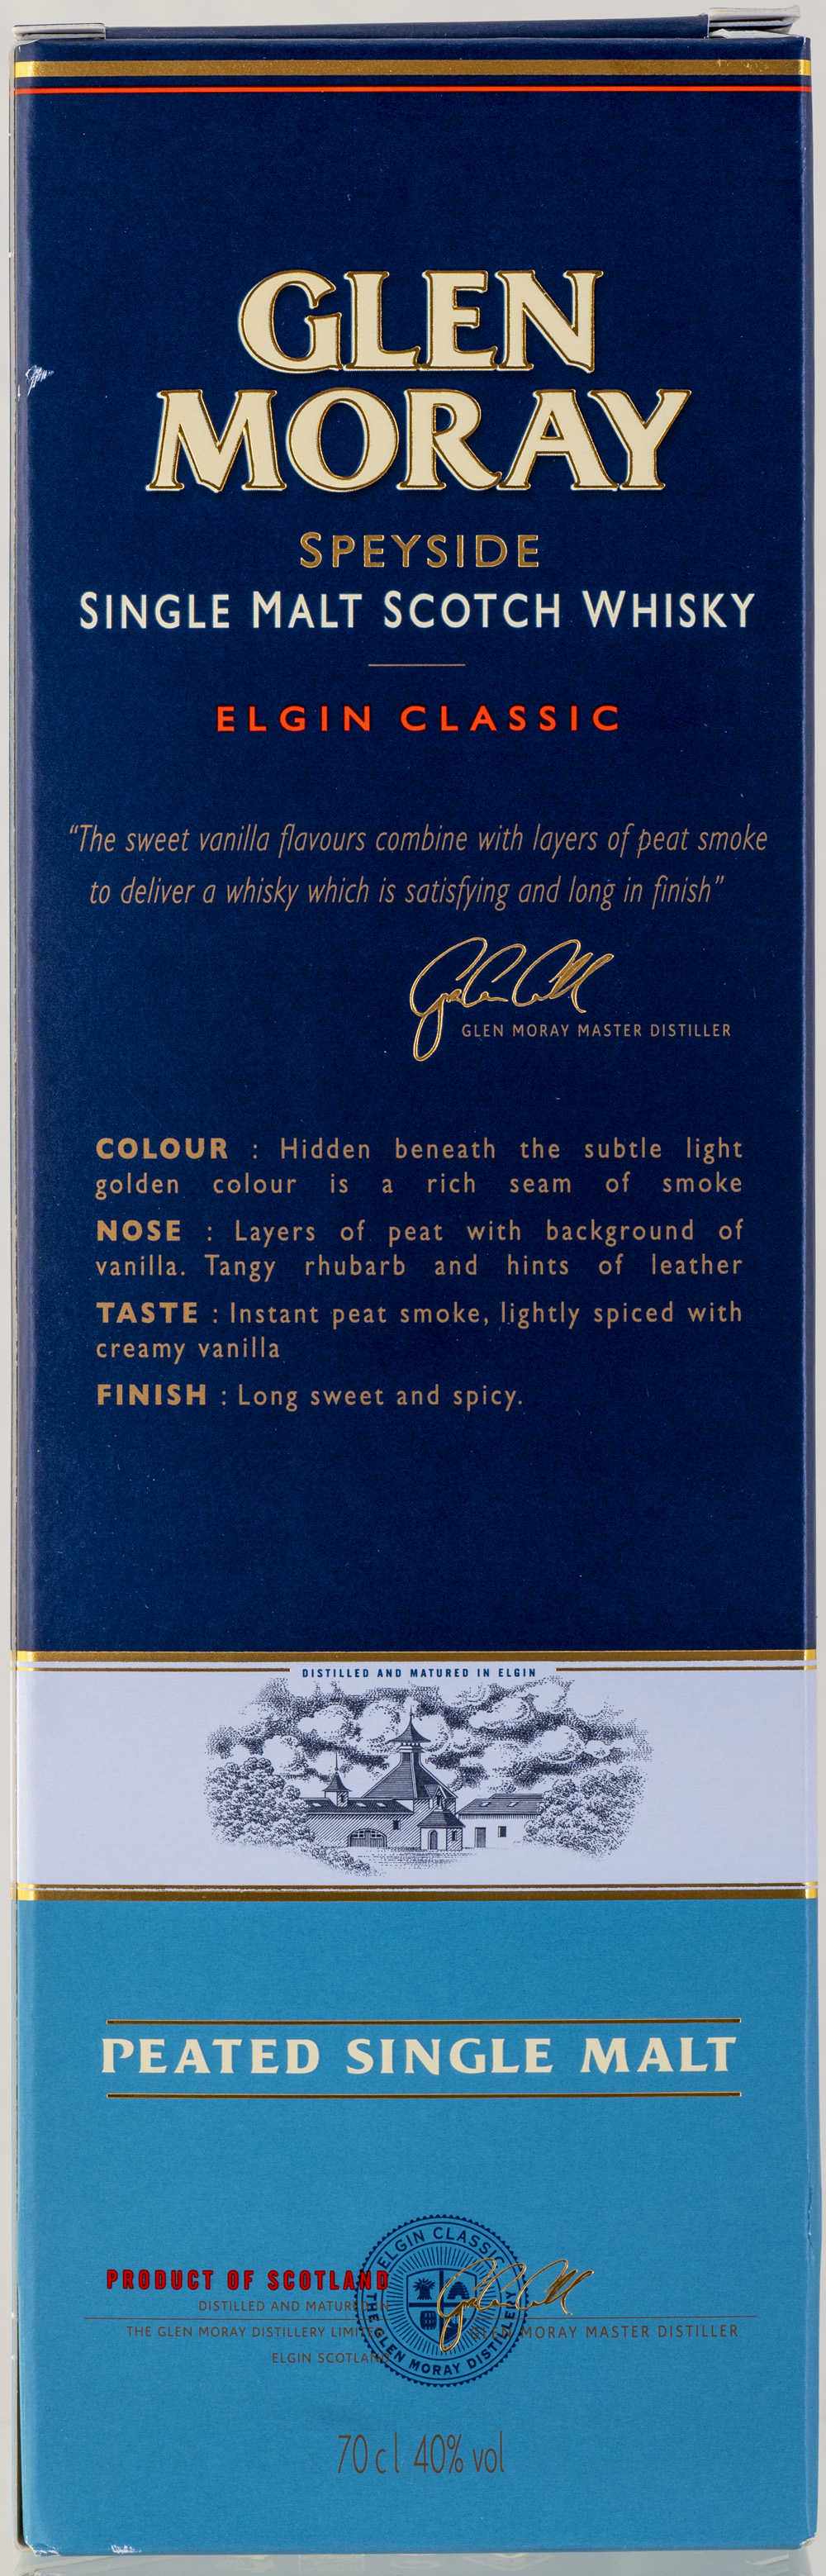 Billede: PHC_2271 - Glen Moray - Elgin Classic Peated - box back.jpg